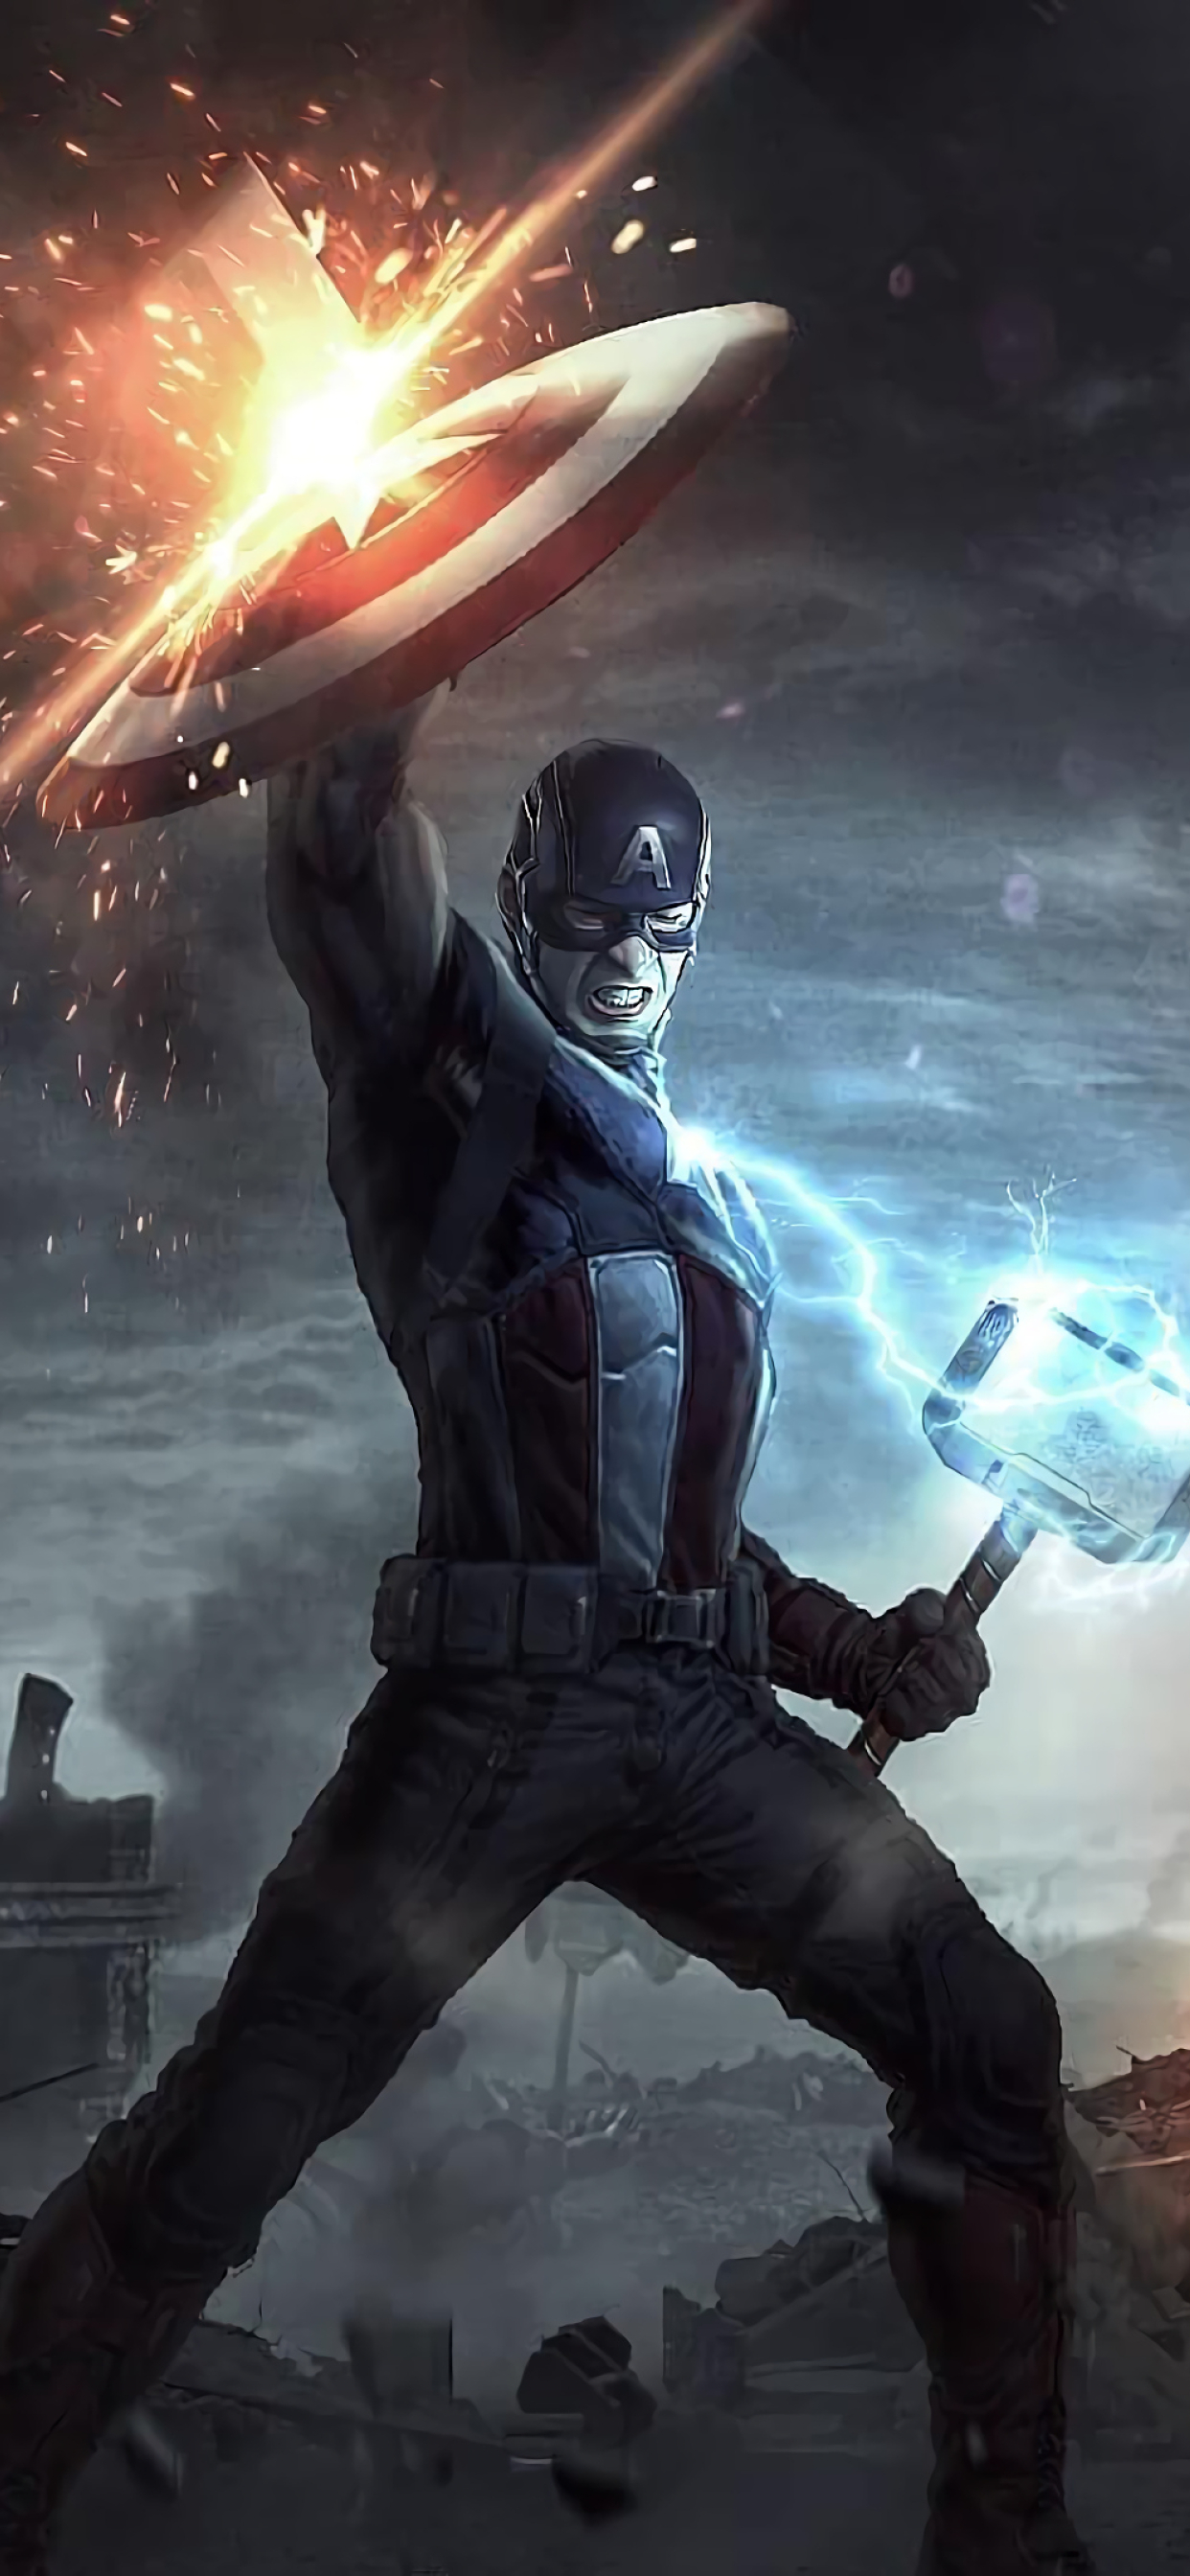 1242x2688 4K Captain America Mjolnir and Shield Iphone XS MAX Wallpaper, HD Superheroes 4K